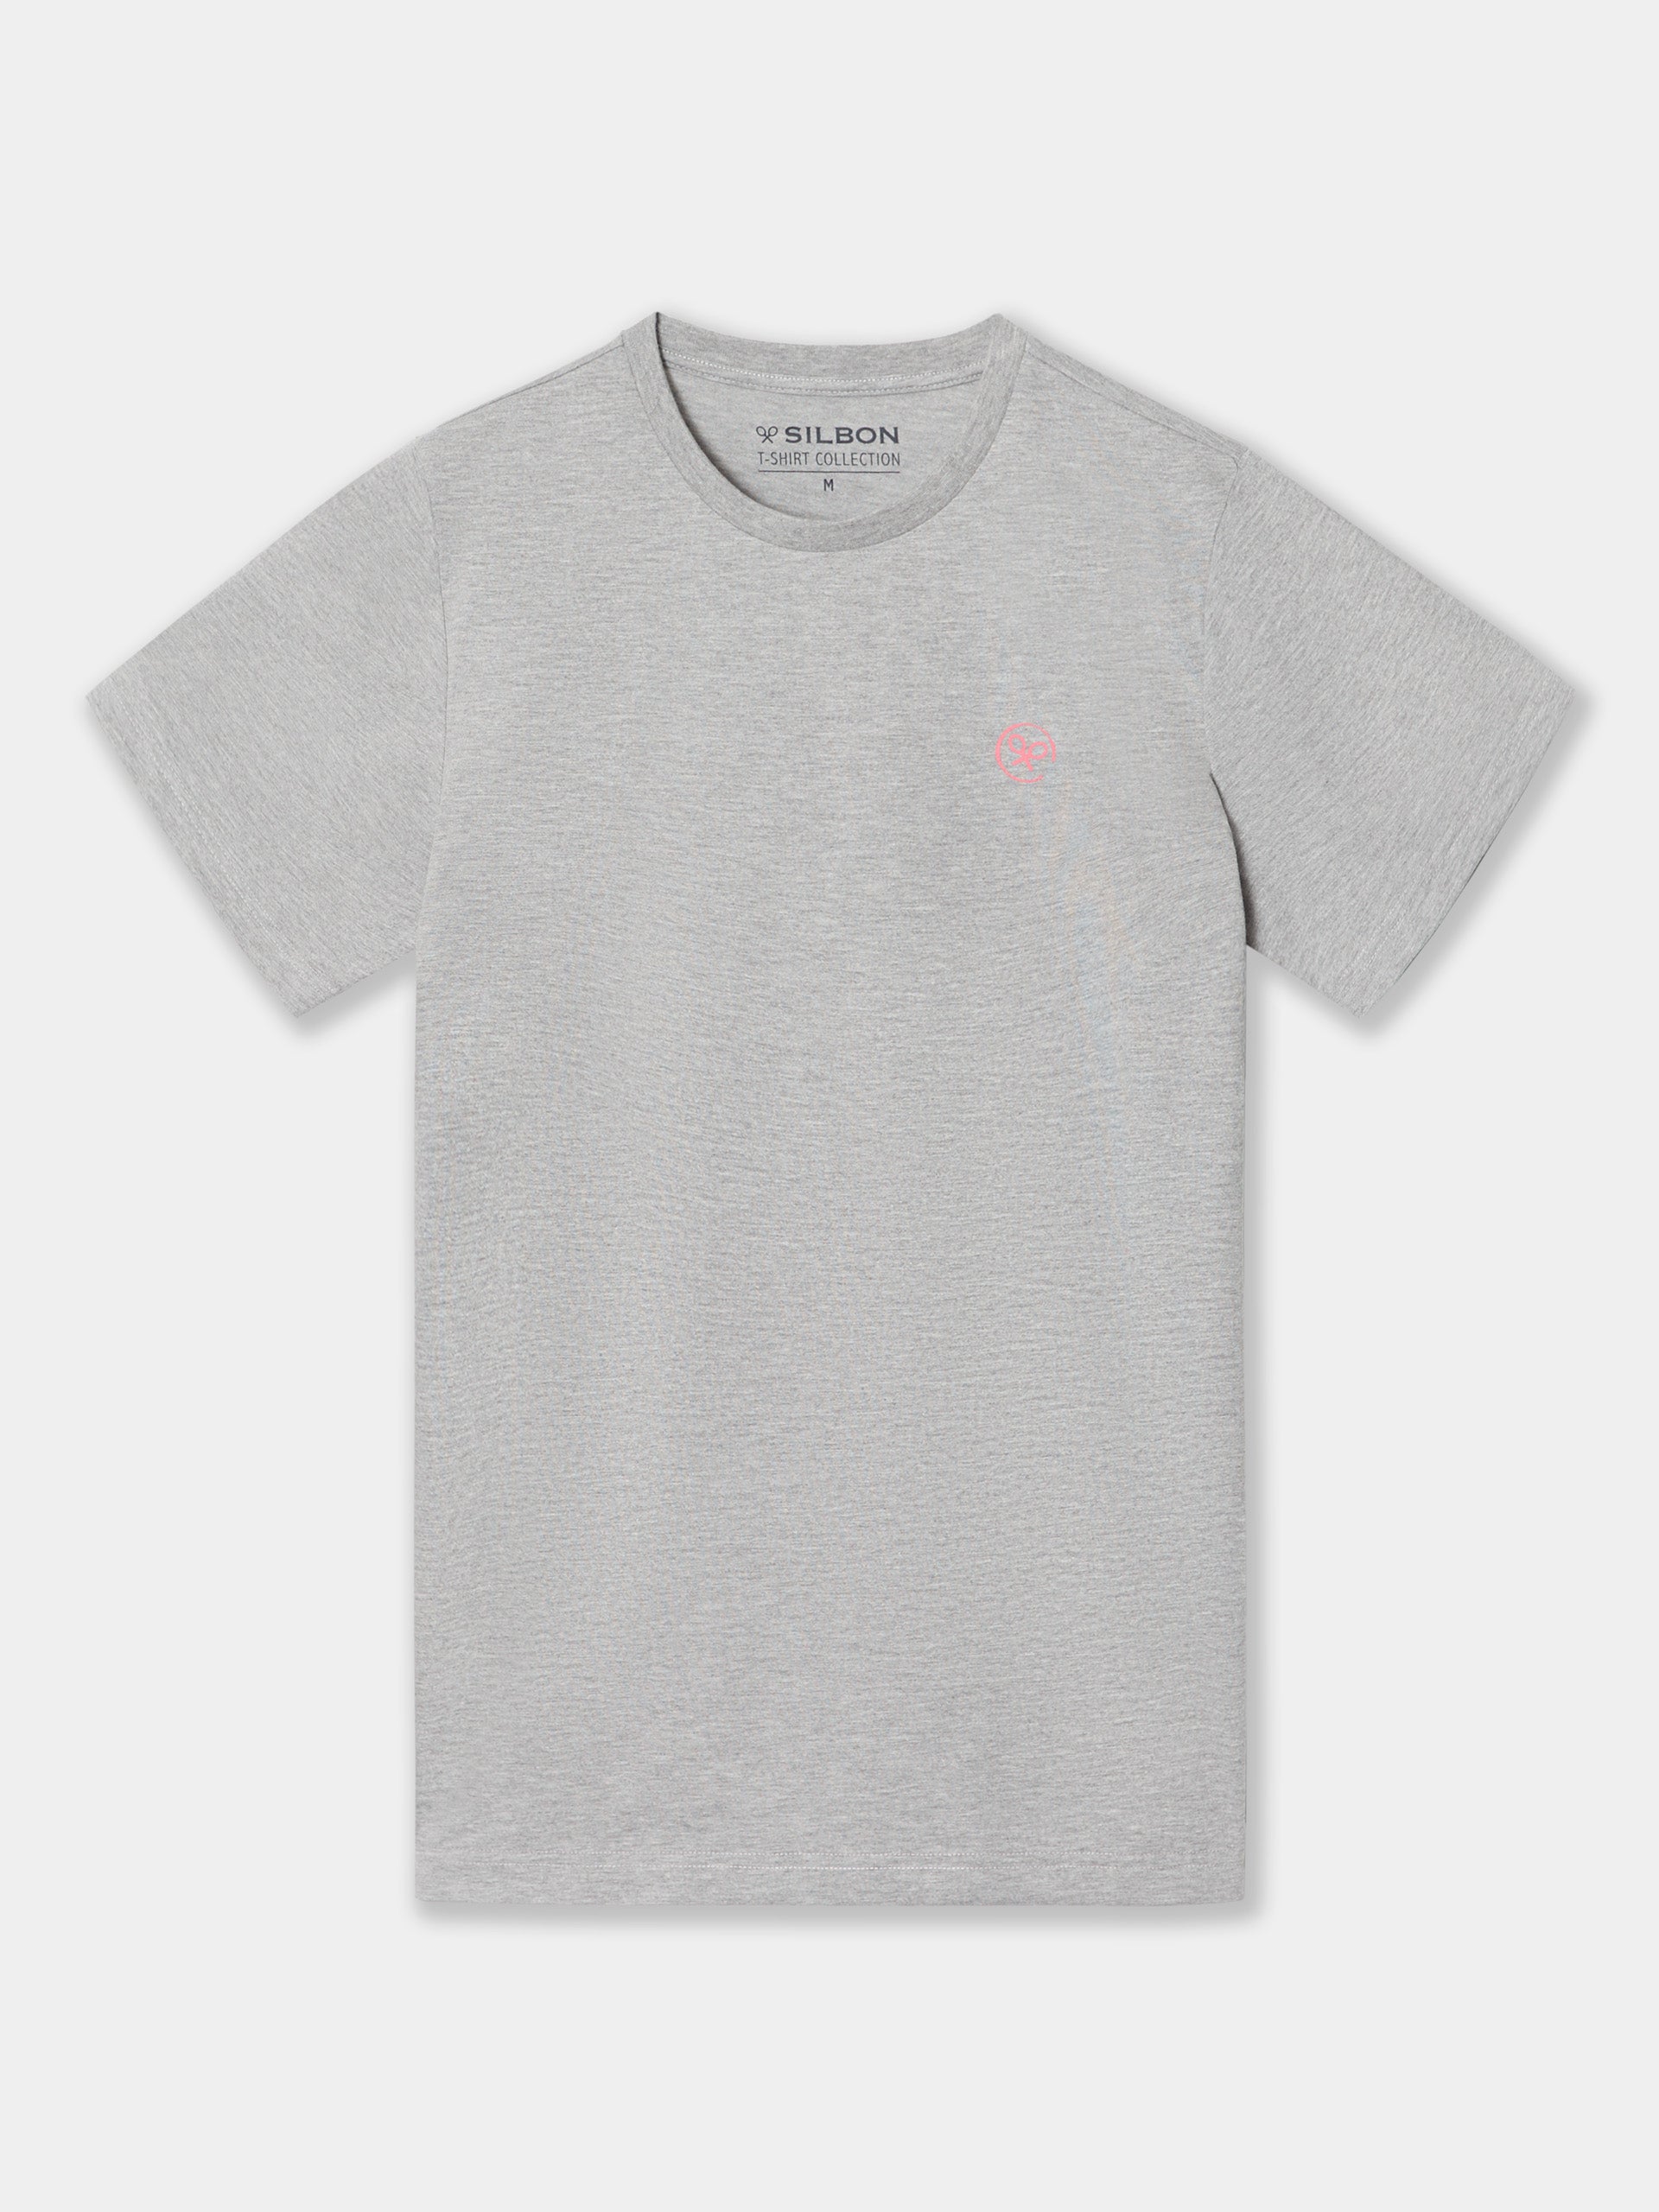 Camiseta circulo raqueta gris